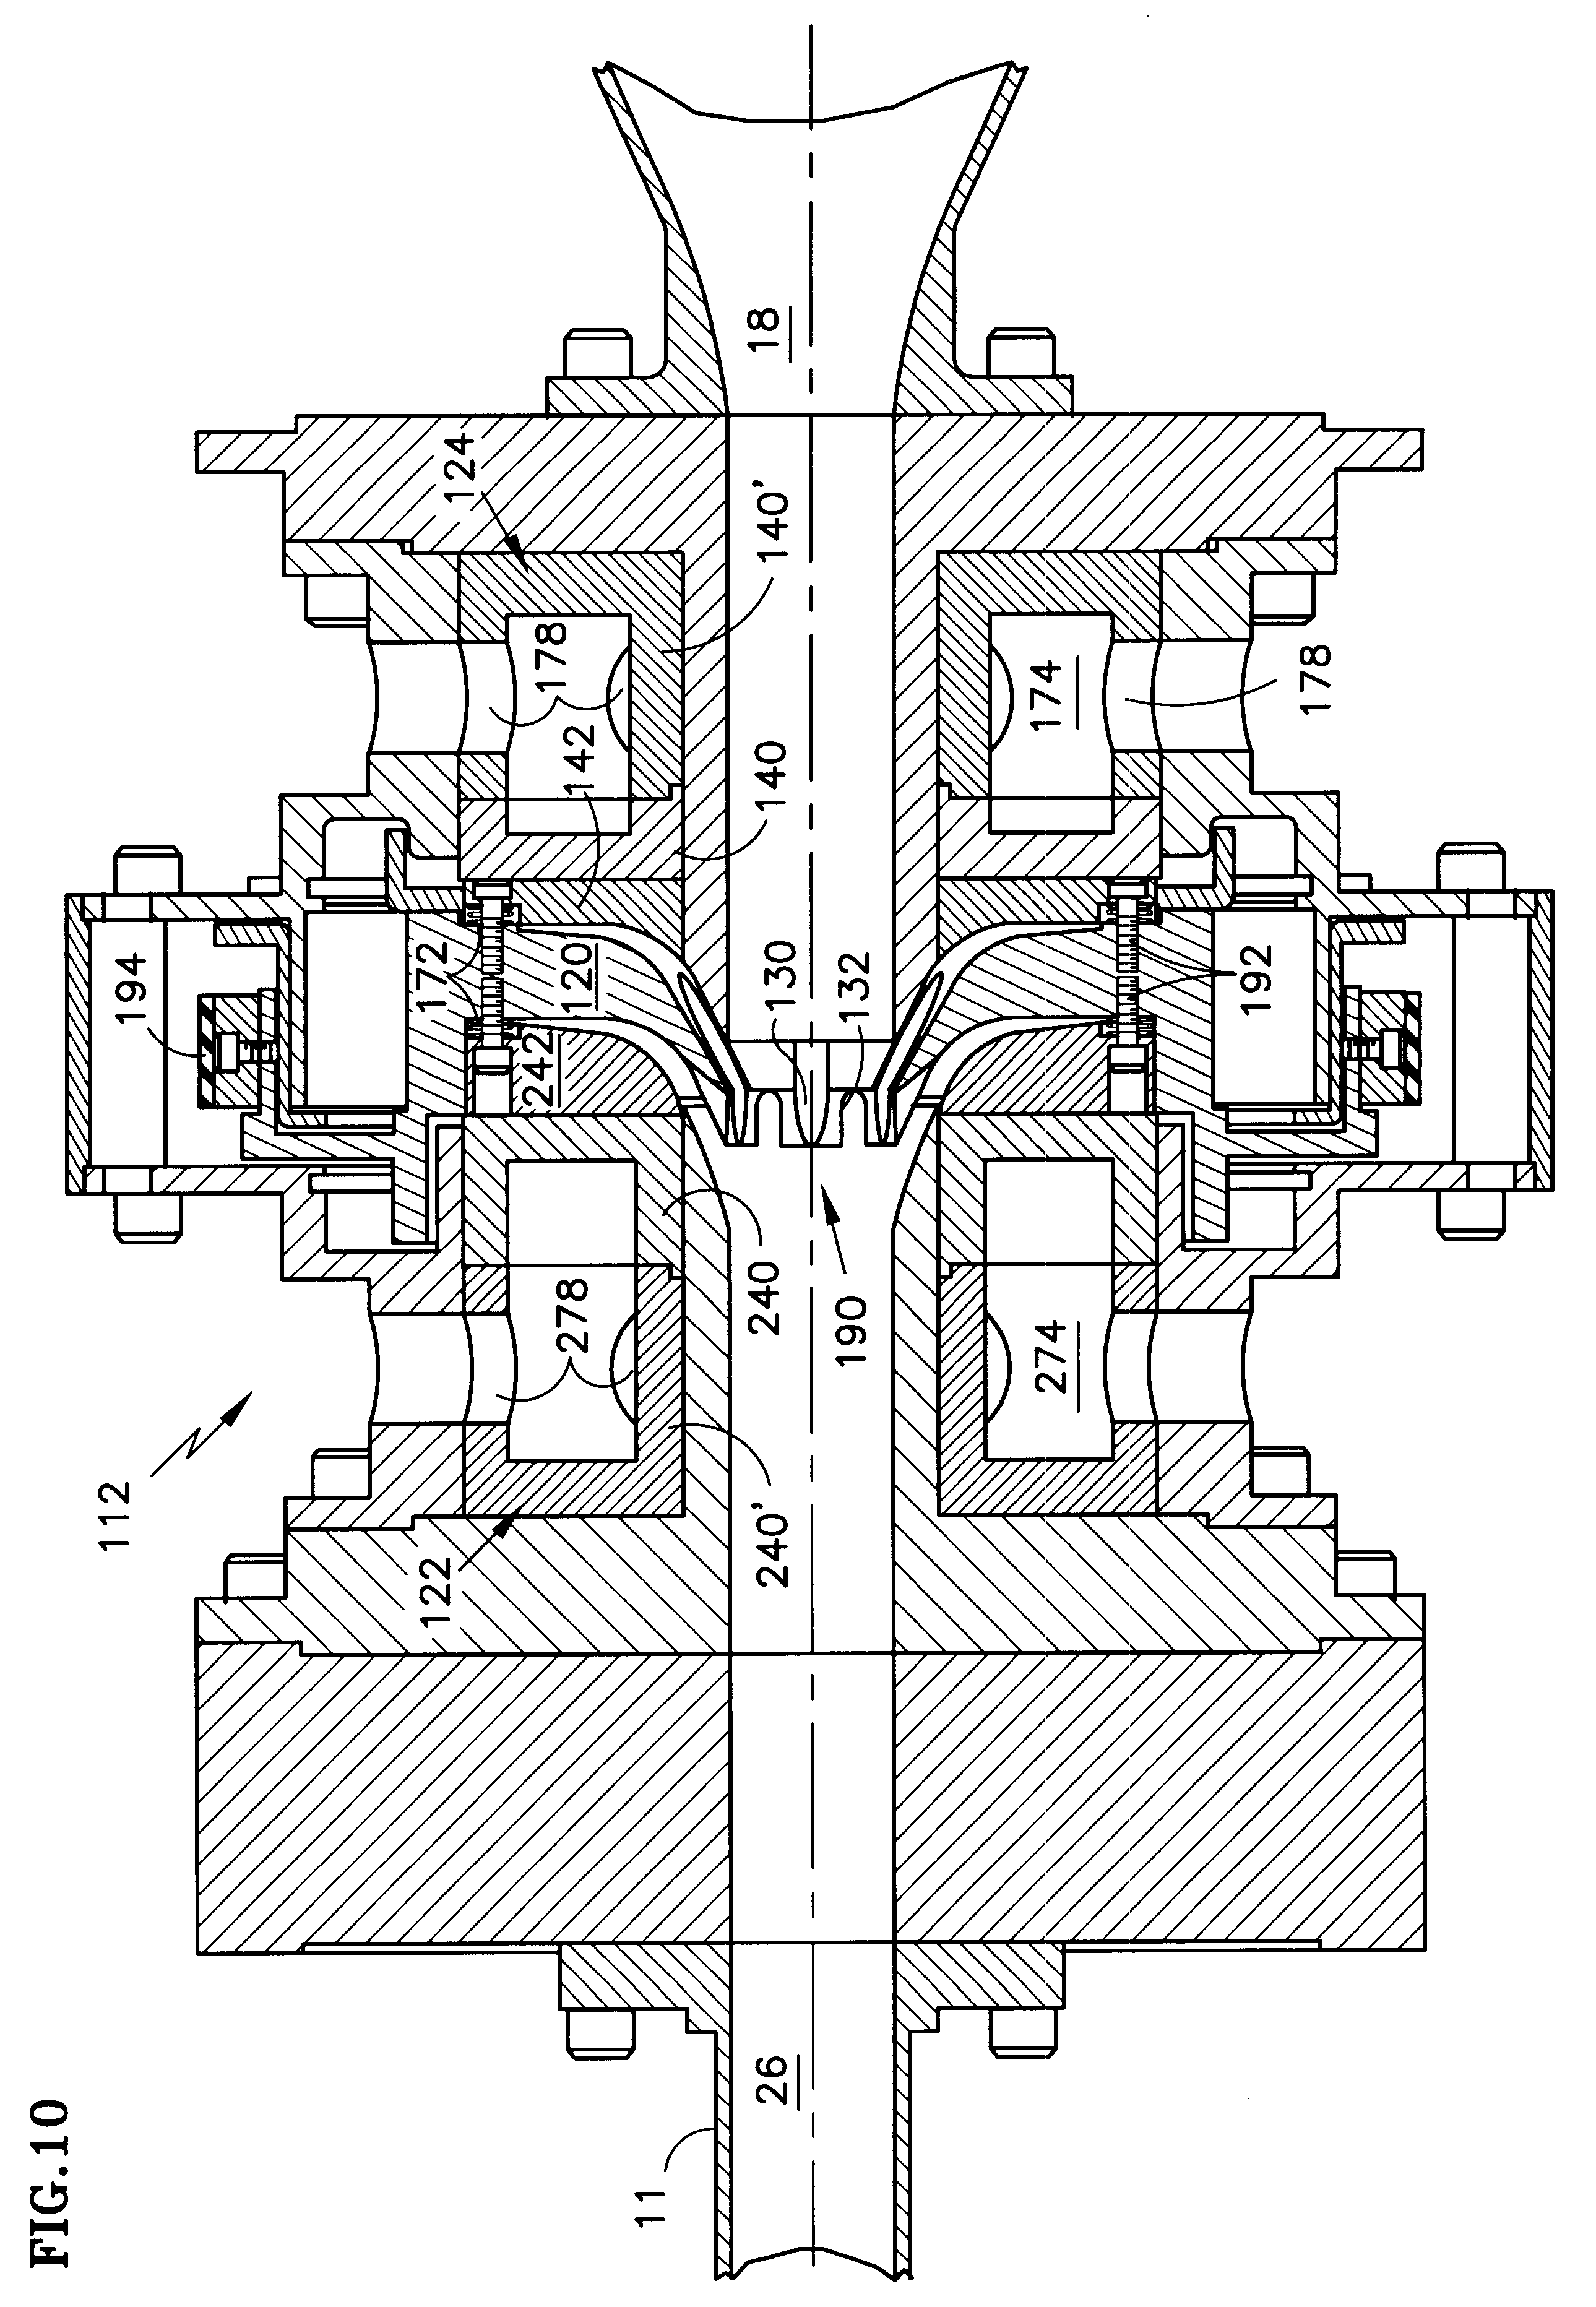 wiring diagram for philips bodine eli-s-100